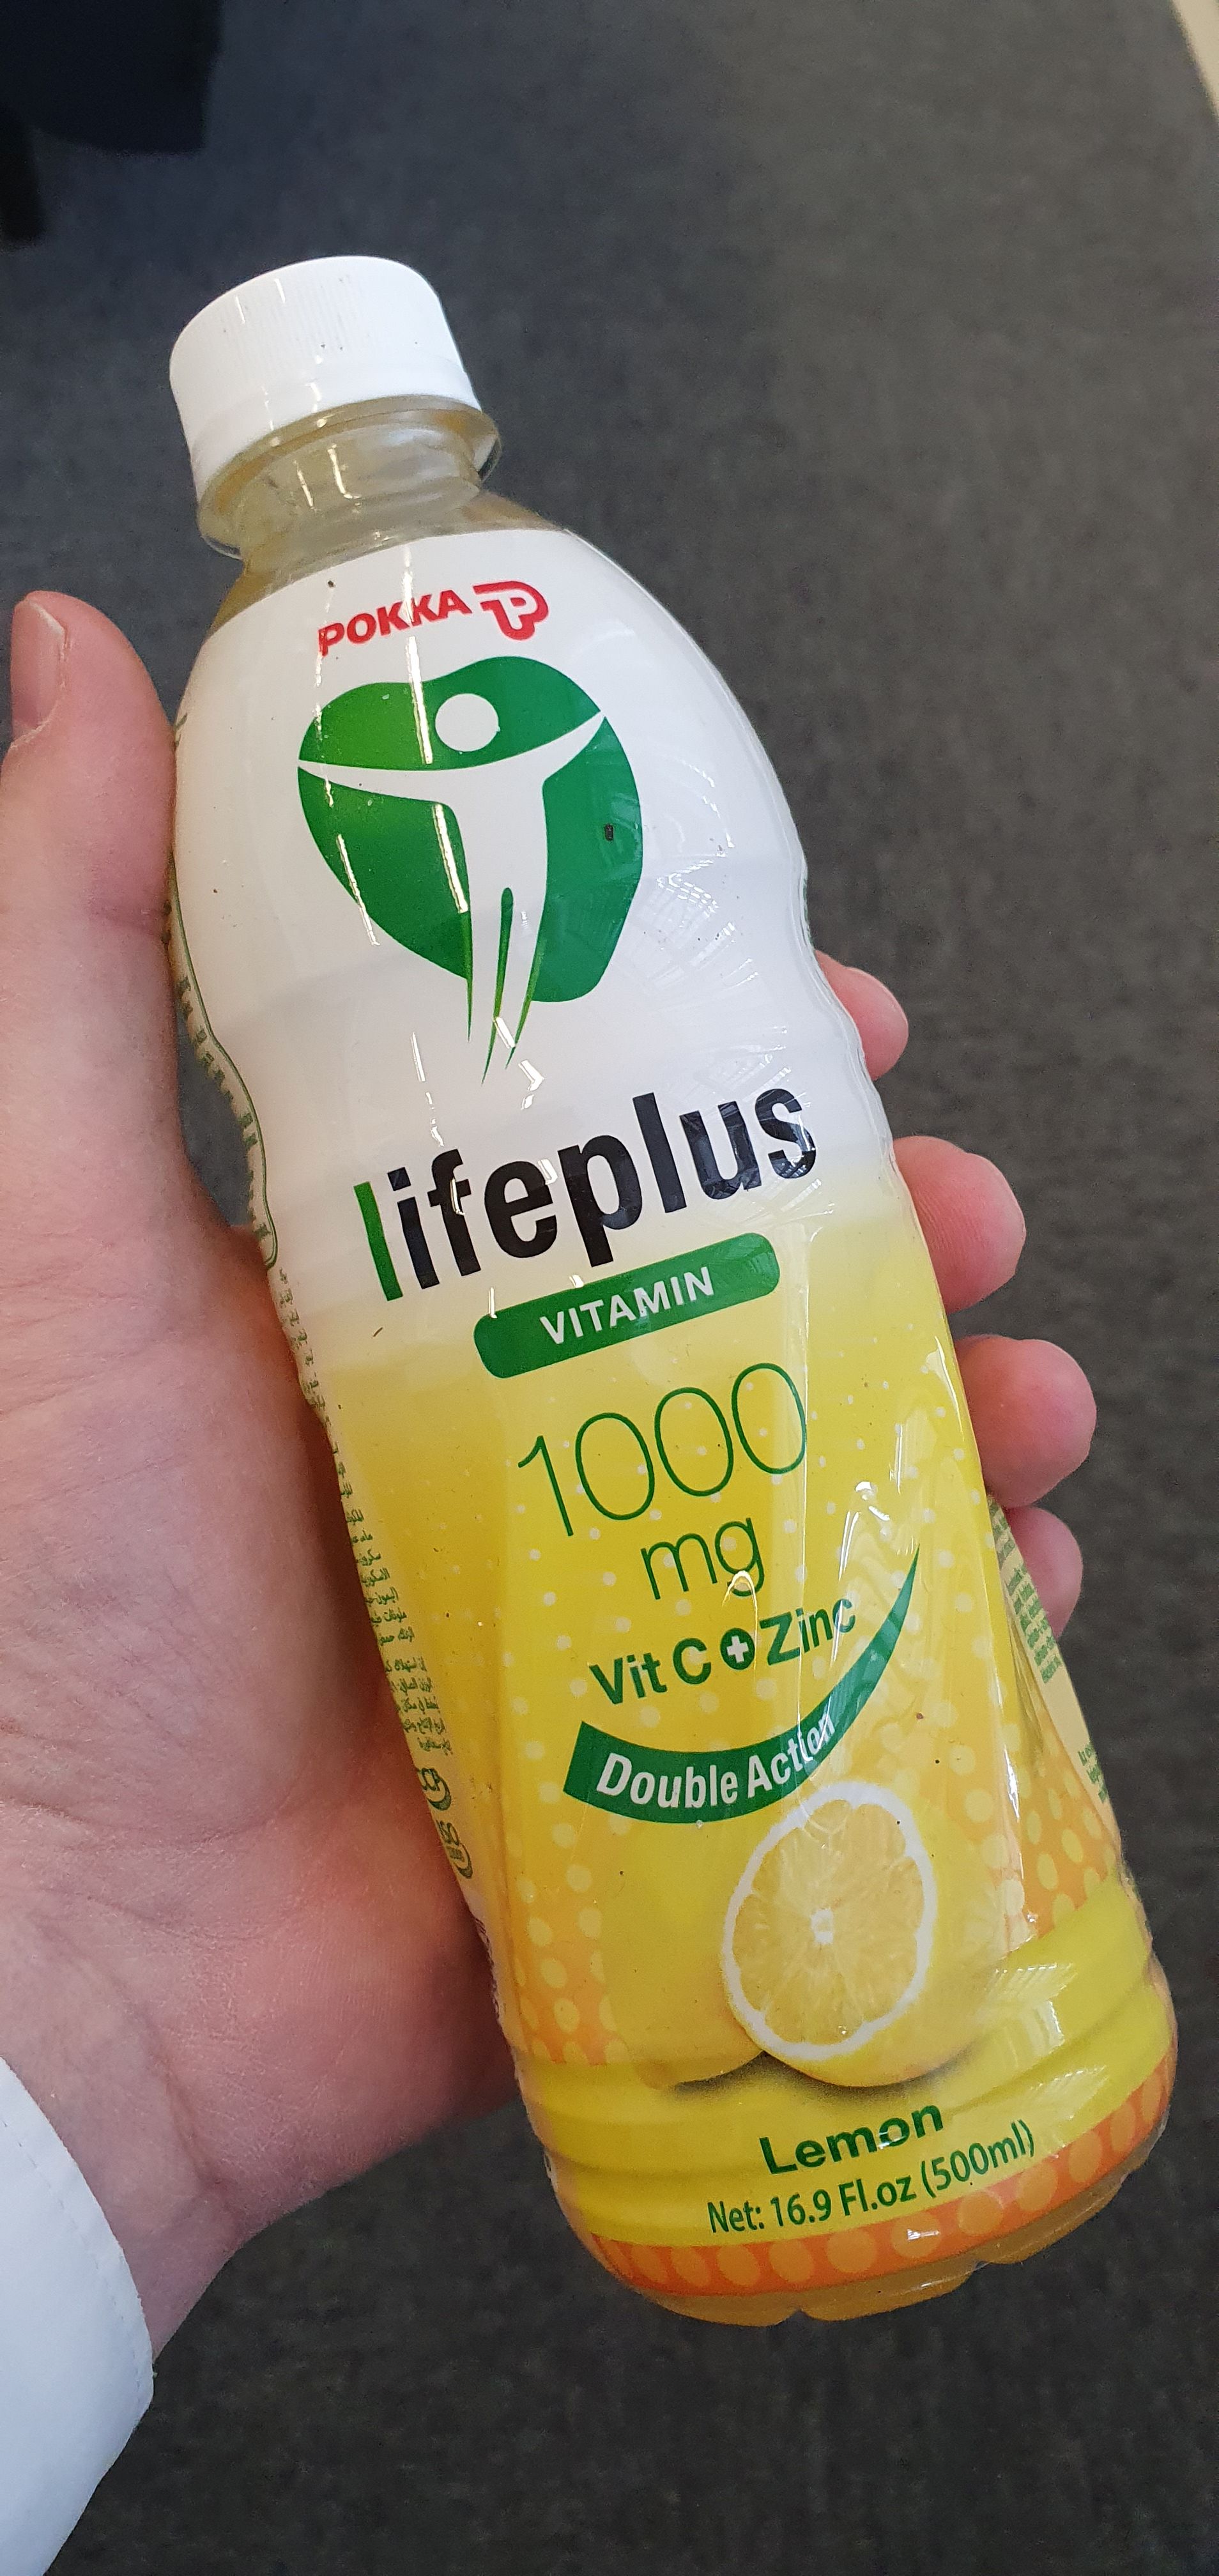 POKKA lifeplus vitamin 1000 mg